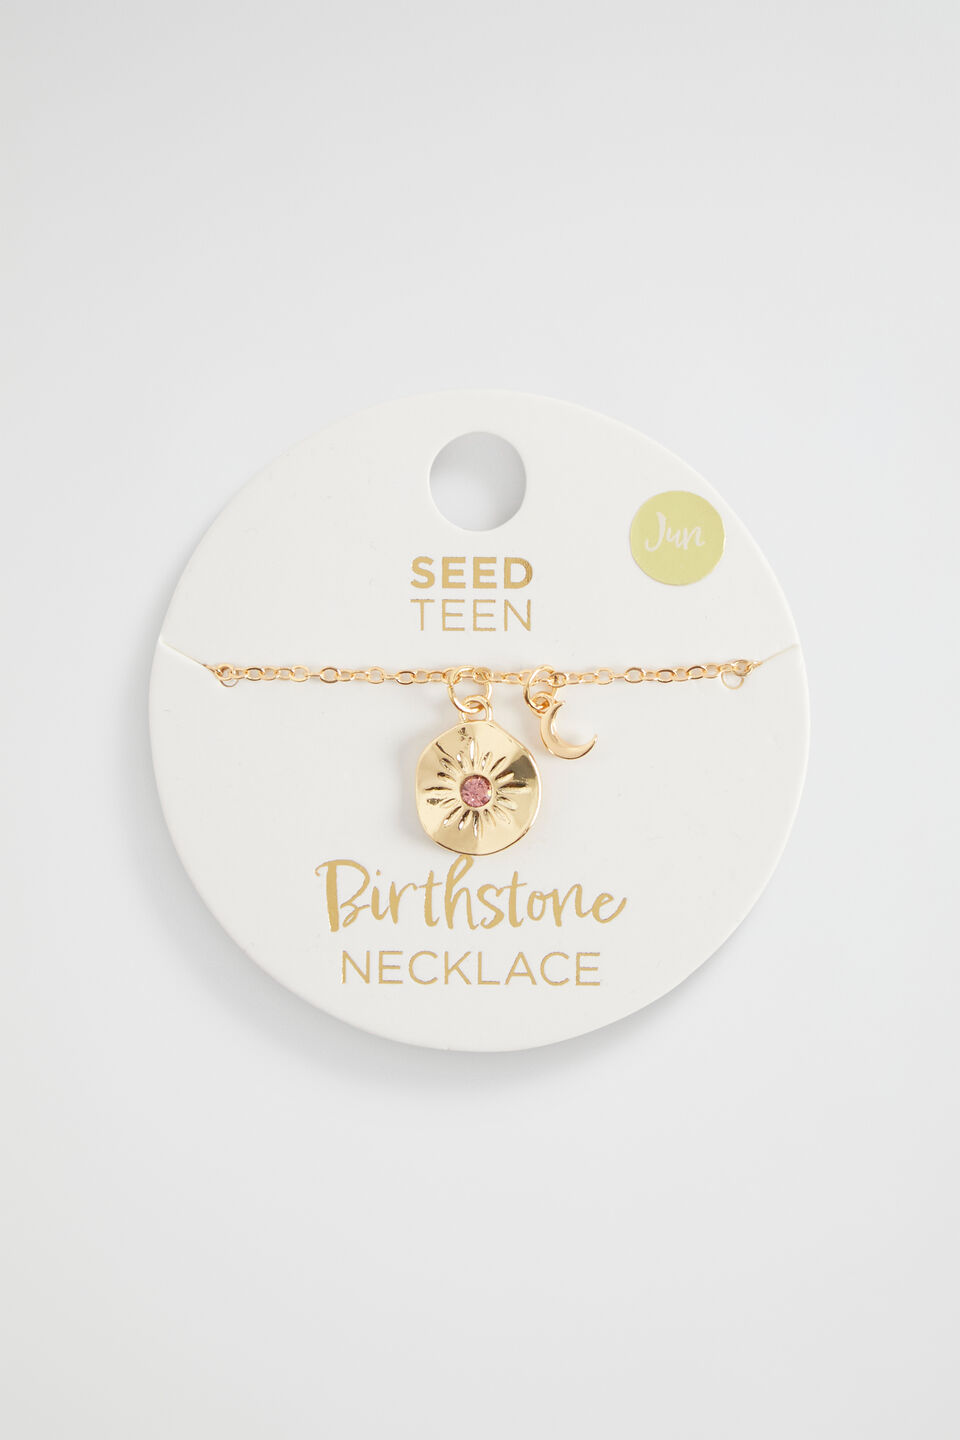 Birthstone Necklace  June